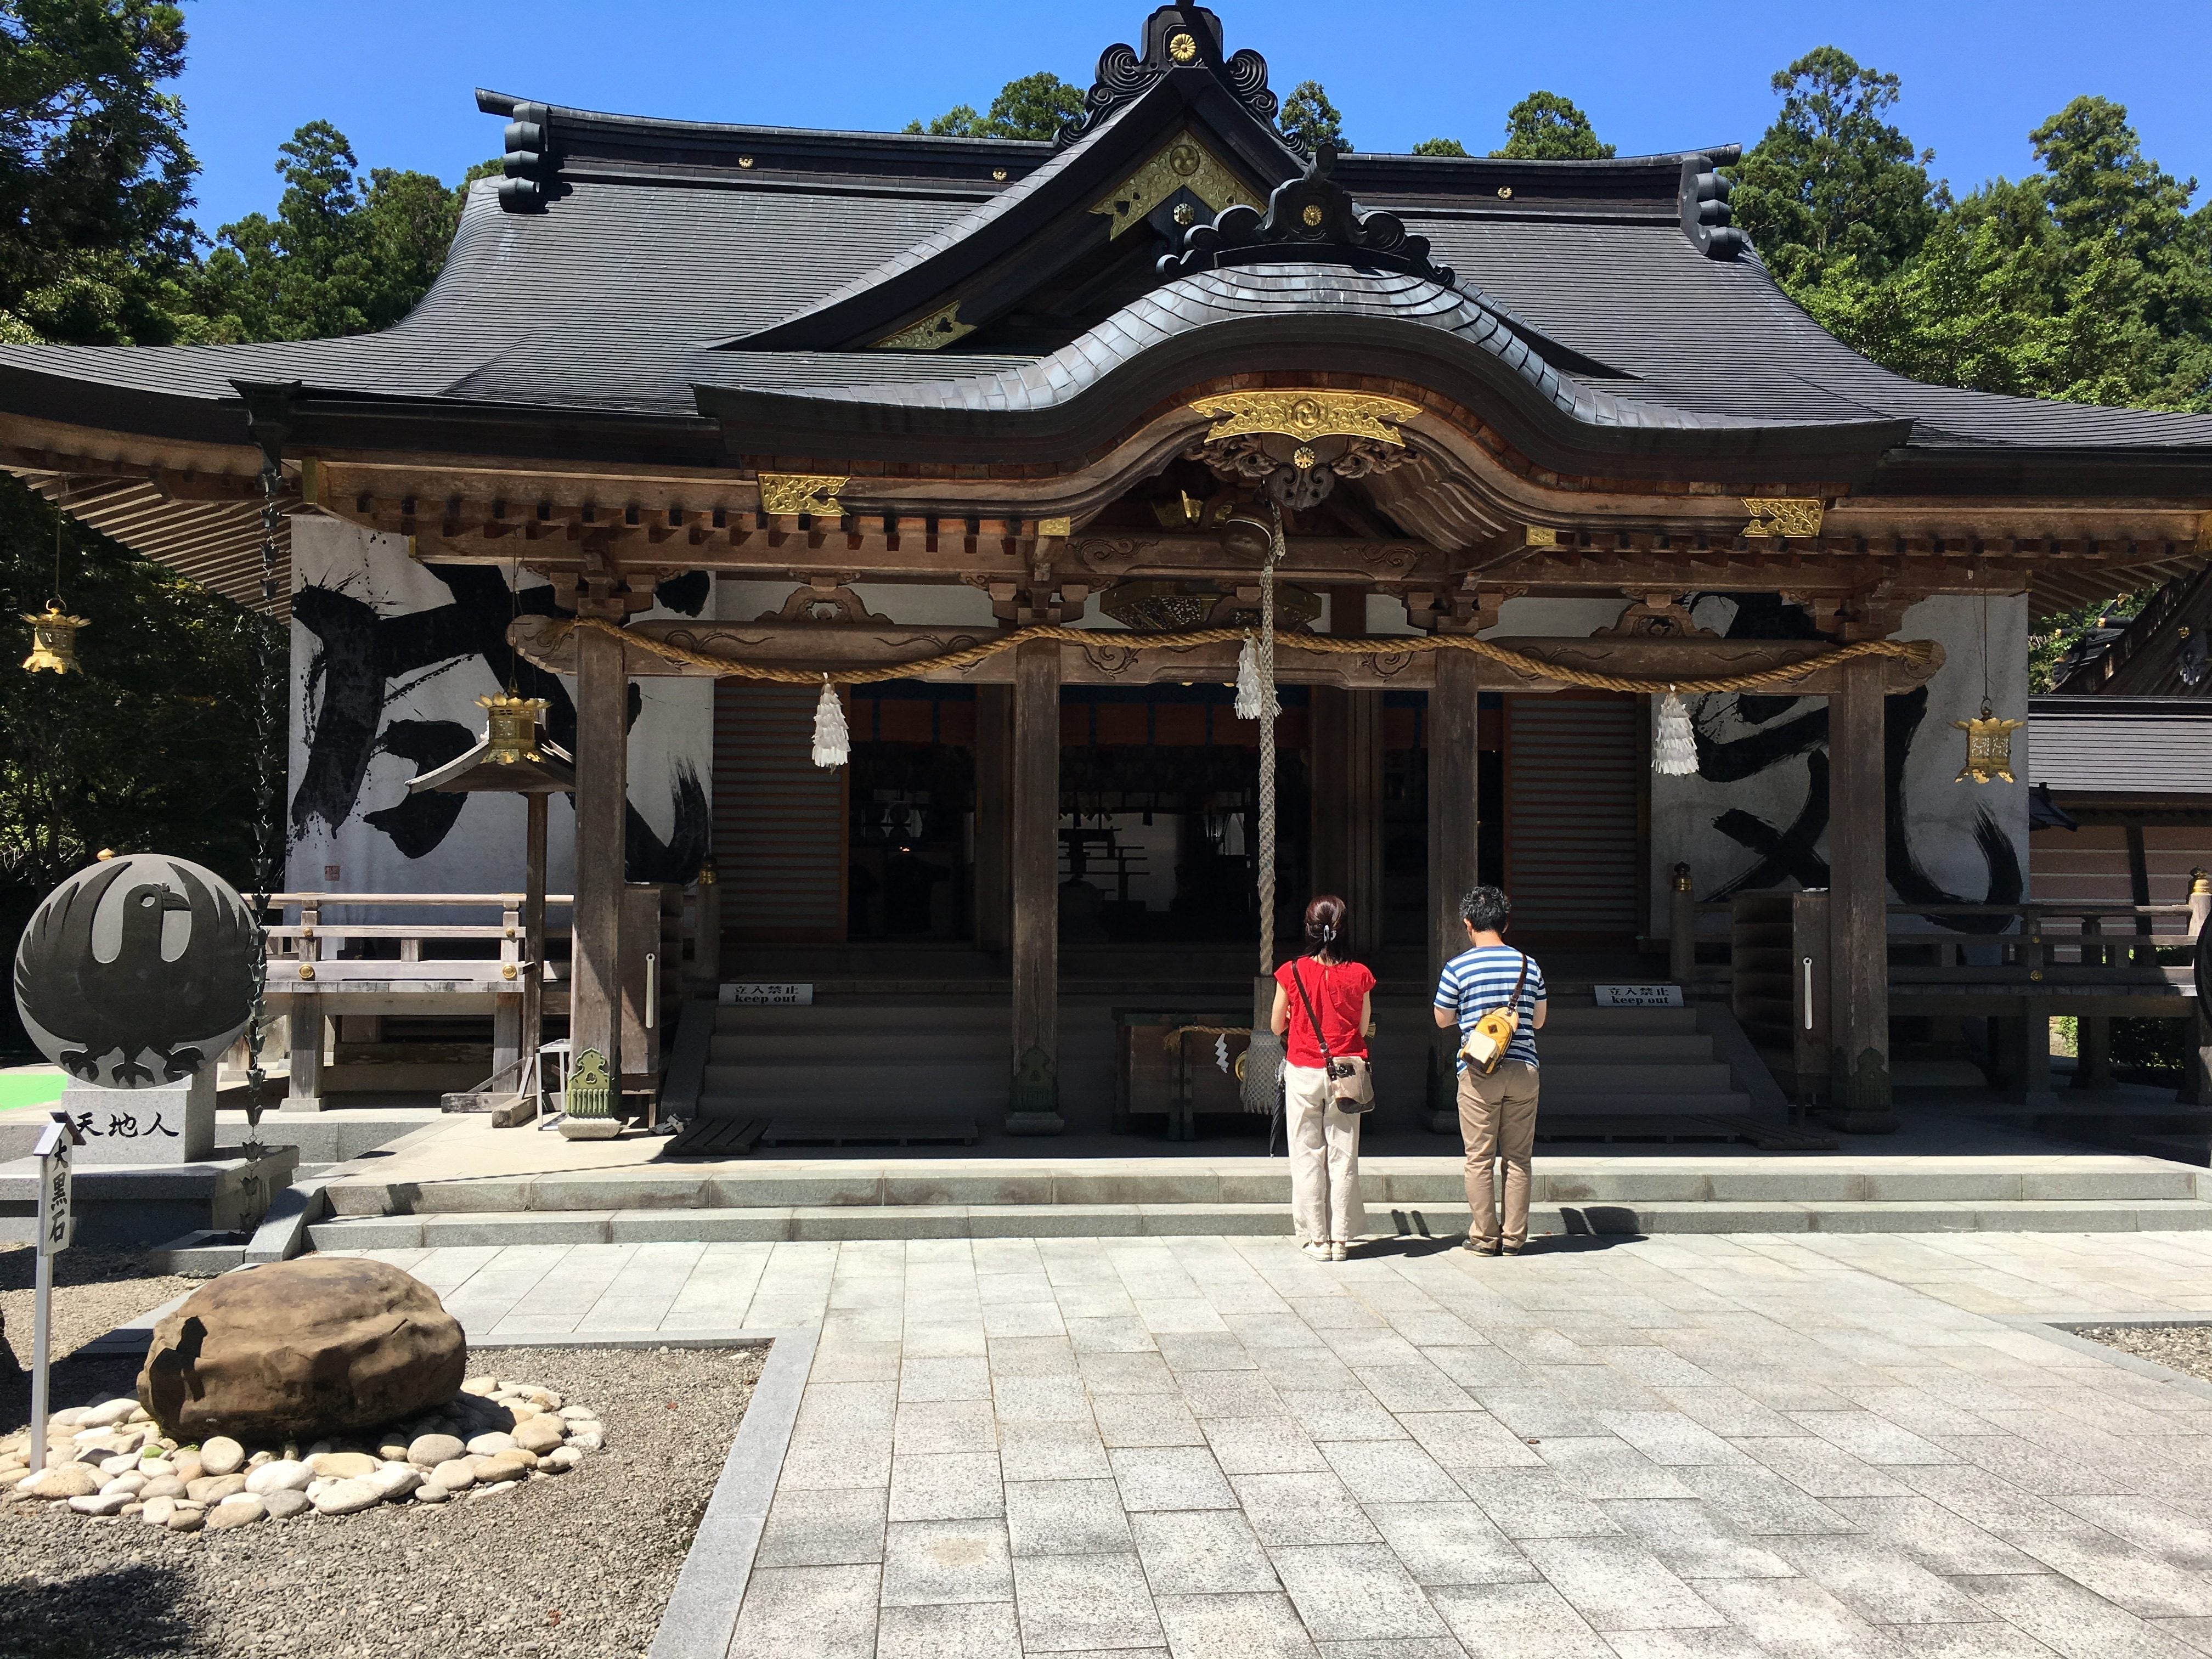 At the Kumano Hongu Taisha grand shrine. Yatagarasu is depicted on the left.